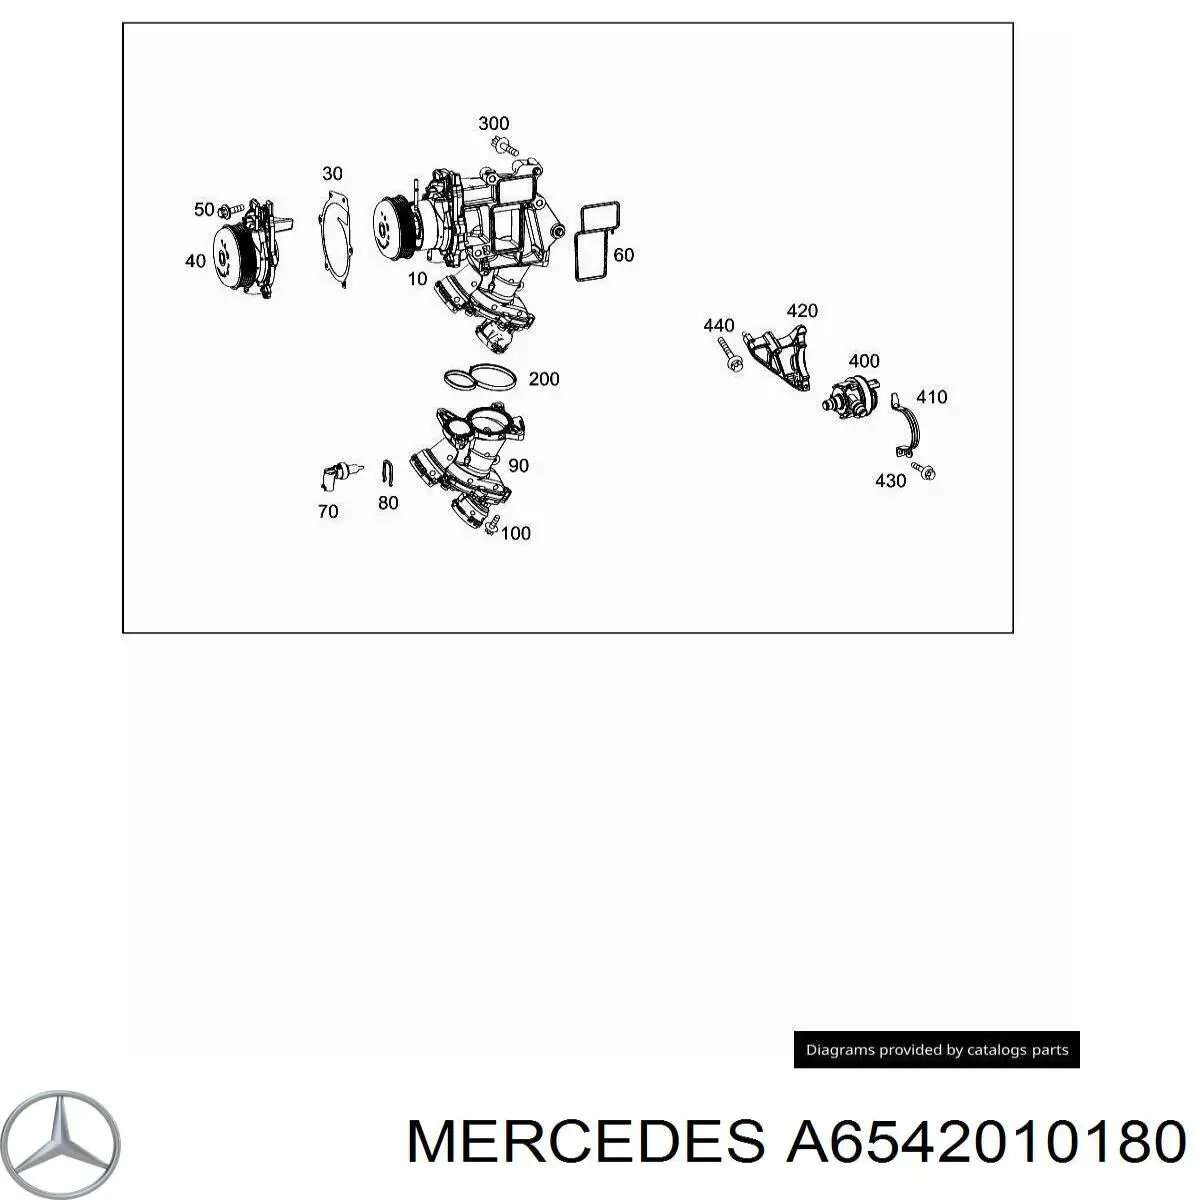 Vedante de bomba de água para Mercedes CLS (C257)